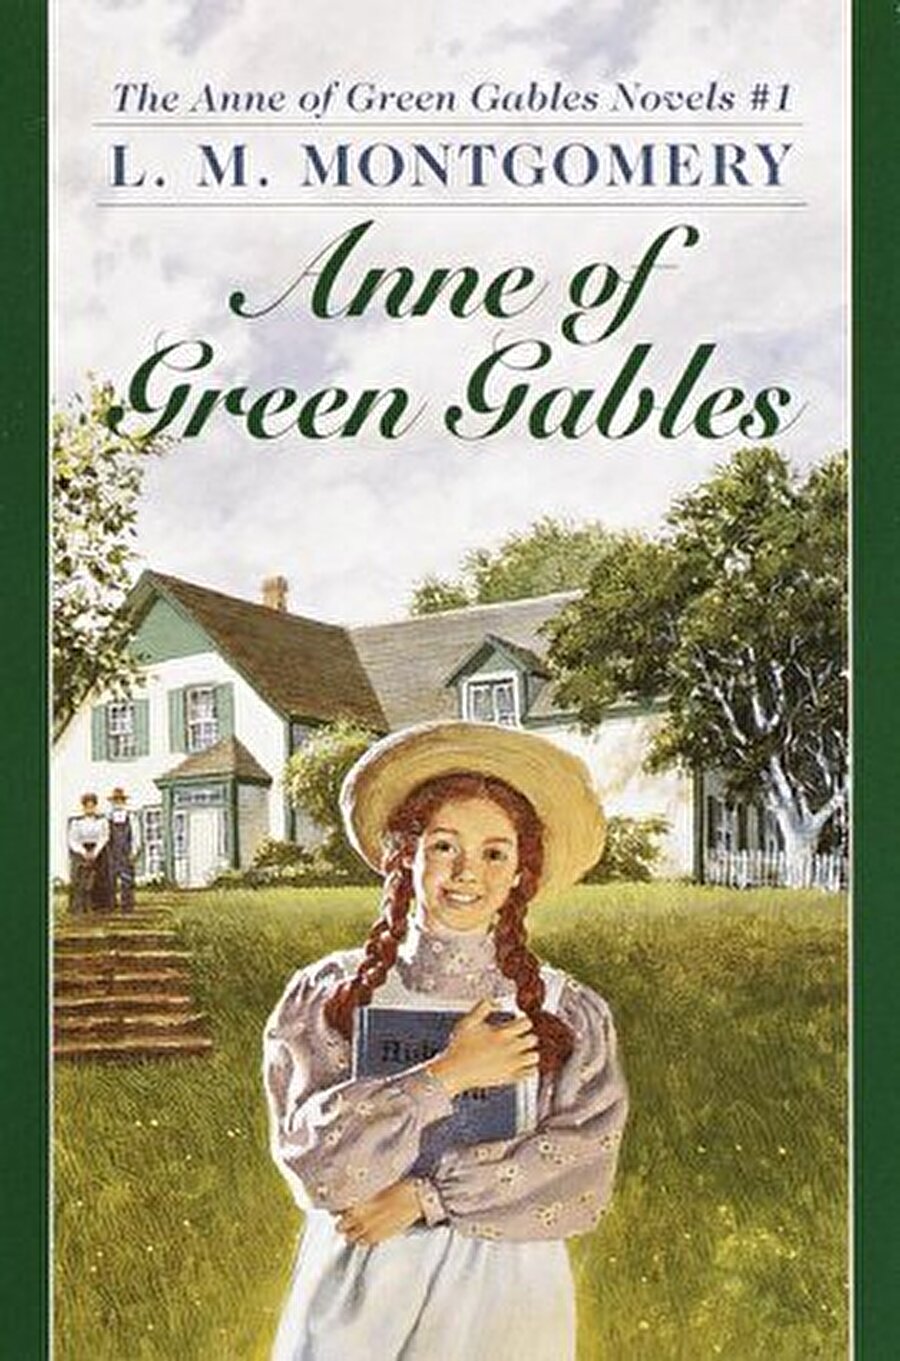 
                                    
                                    
                                    
                                     Yeşilin Kızı Anne, Lucy Maud Montgomery (Kanada)
                                
                                
                                
                                